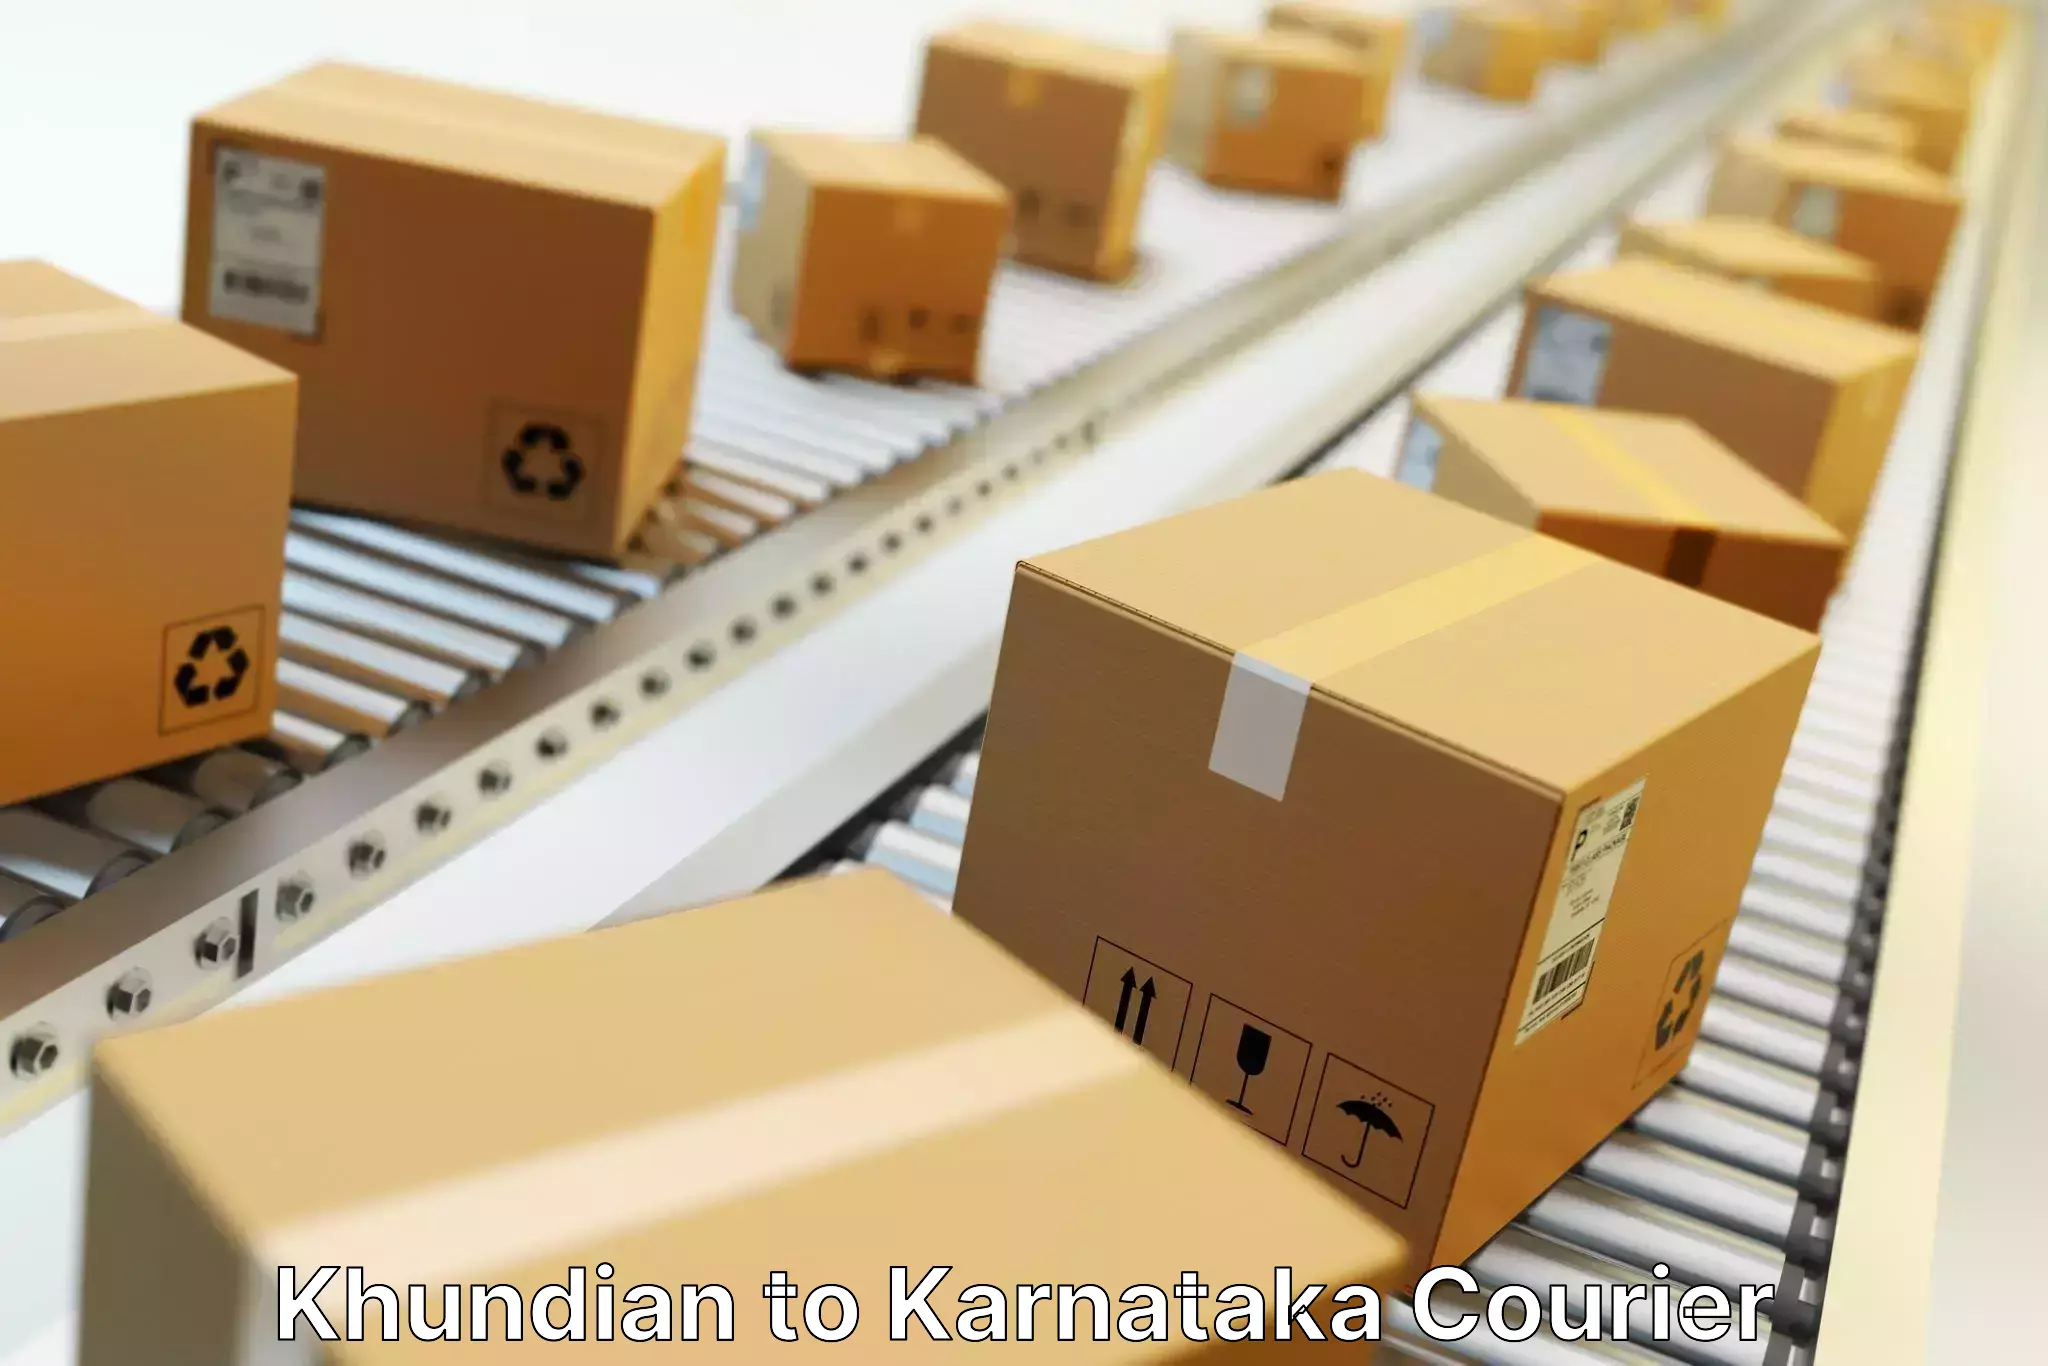 Modern courier technology Khundian to Karnataka